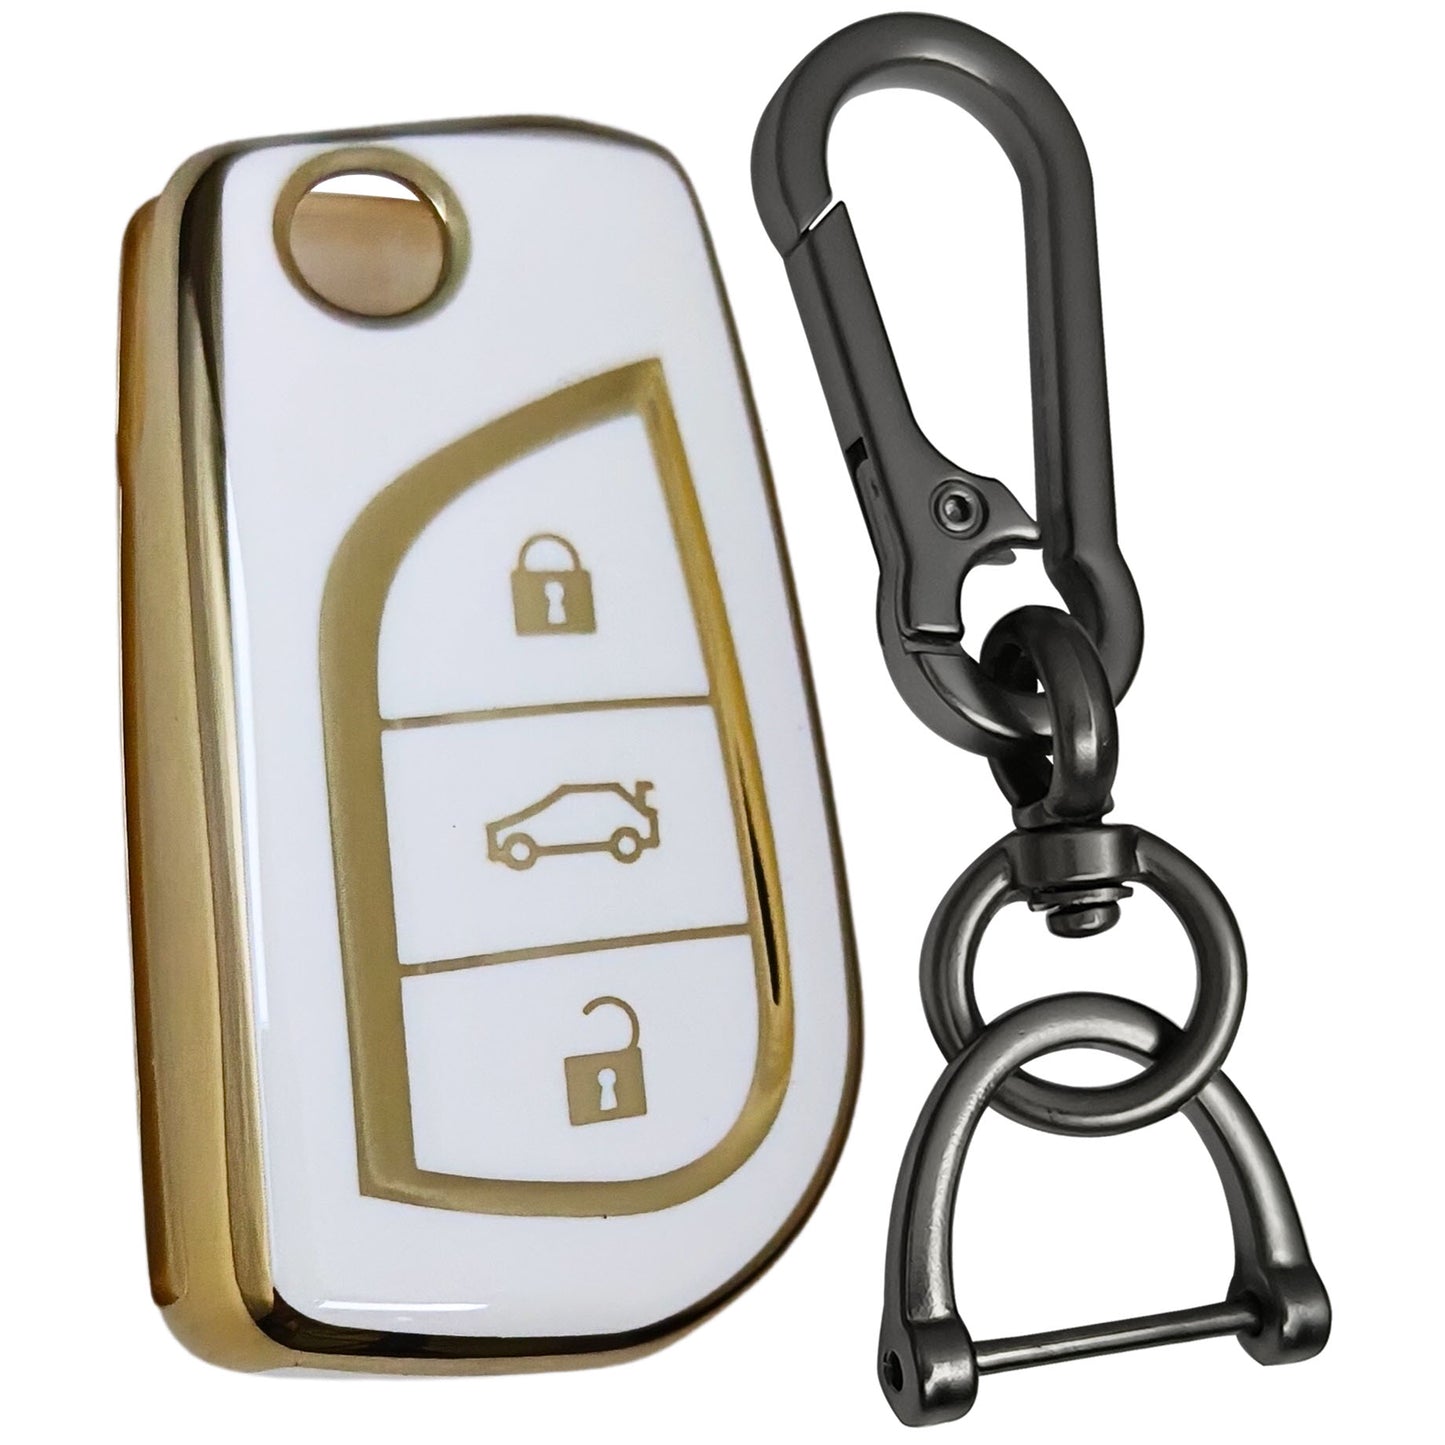 toyota corolla innova crysta 3 button flip tpu white gold key cover case accessories keychain